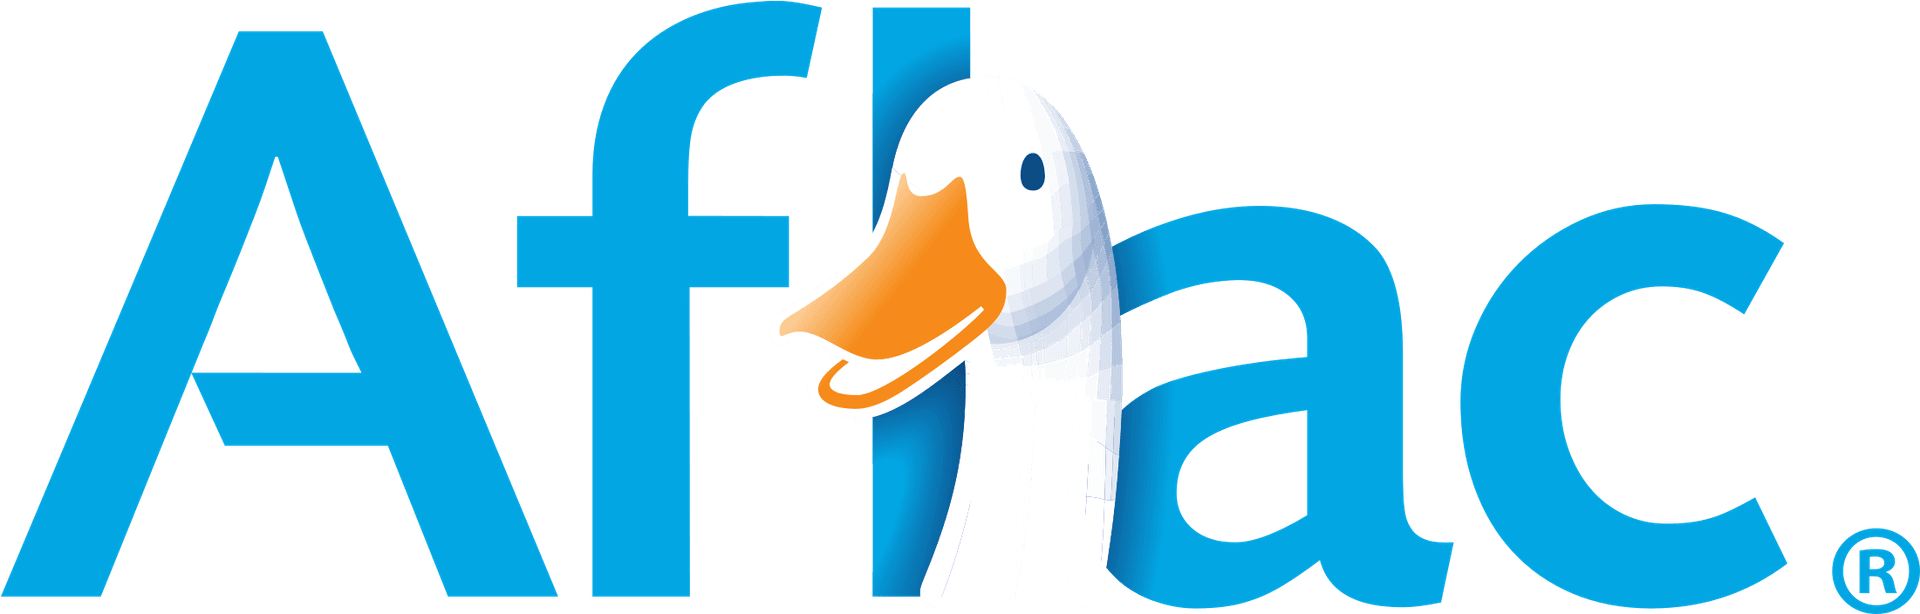 marketing strategy of aflac - logo